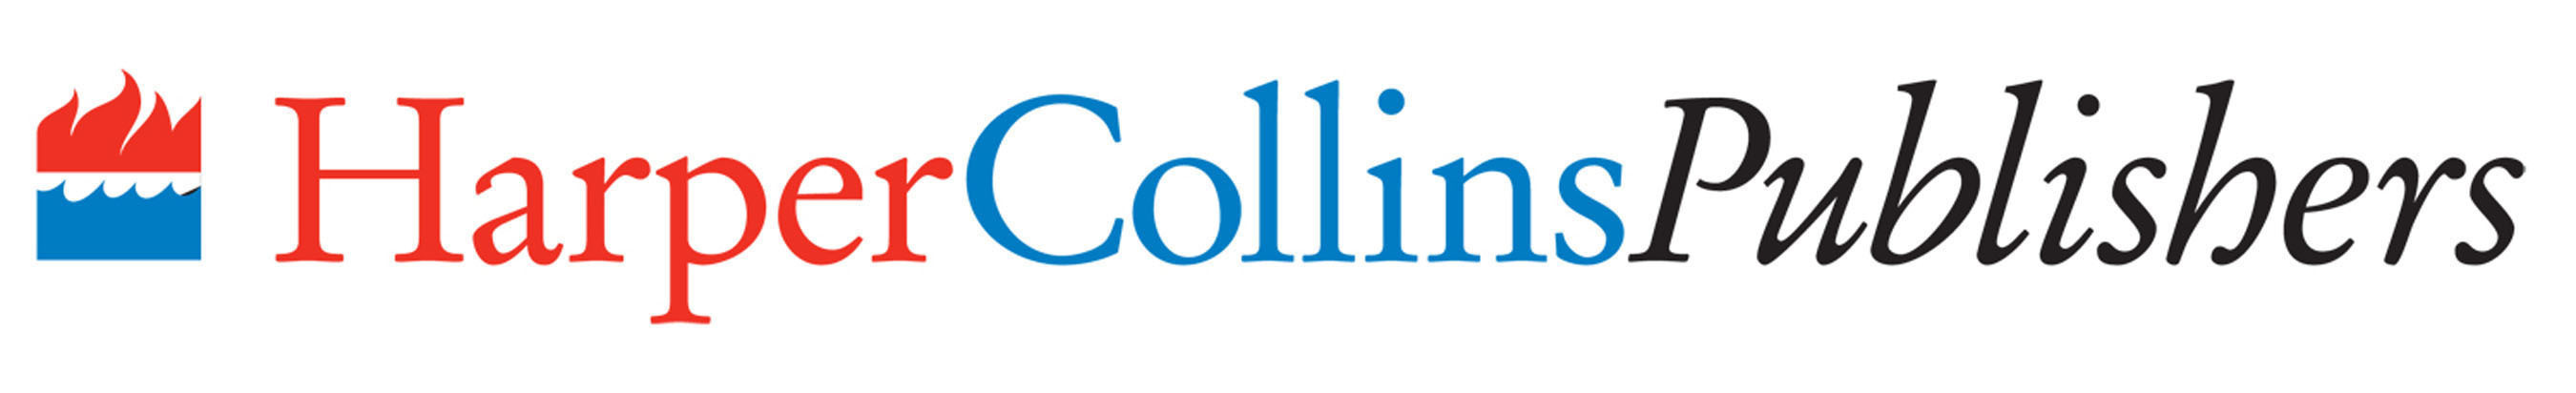 HarperCollins Publishers Logo